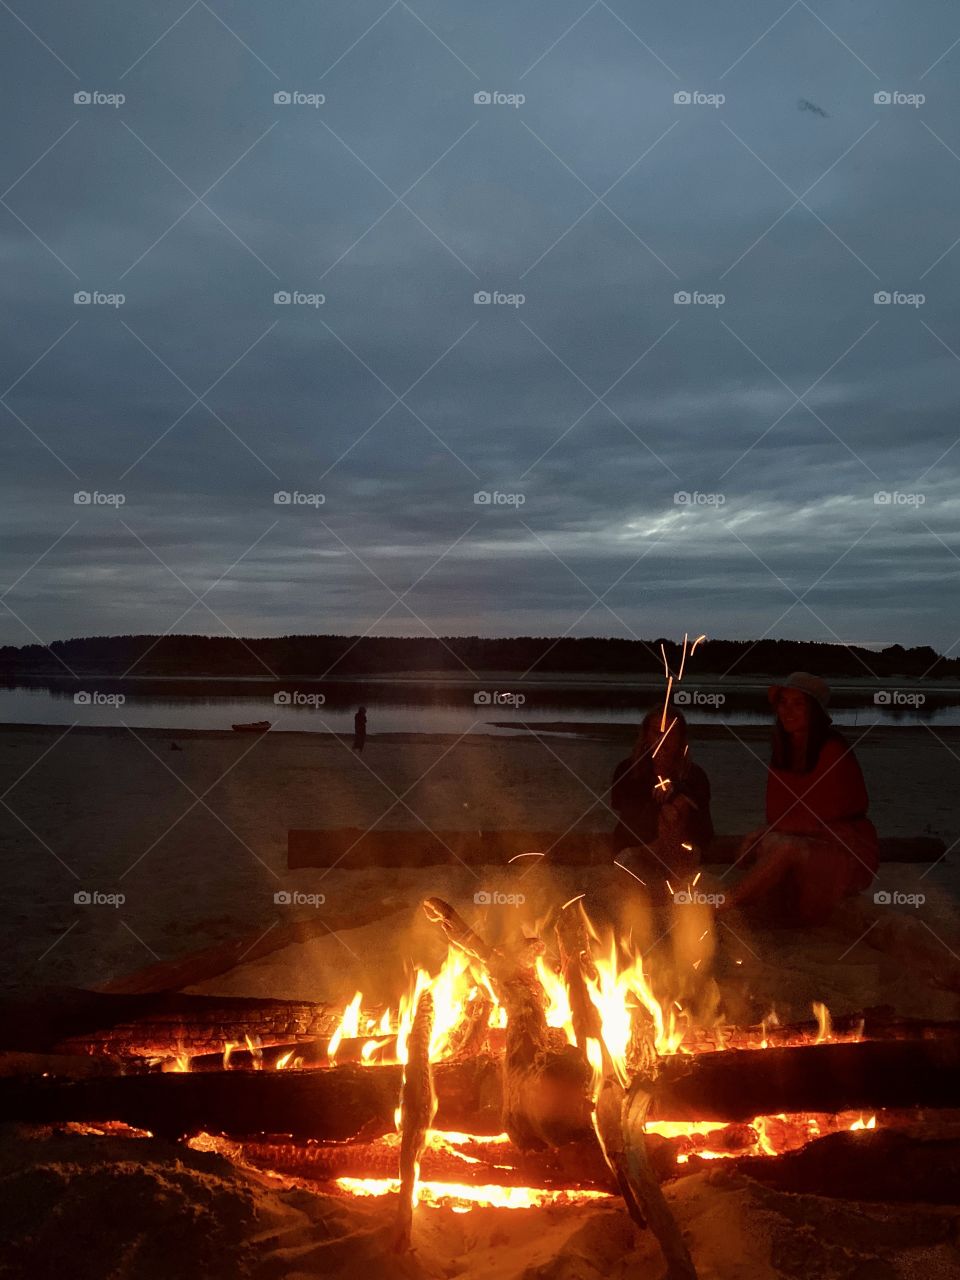 Heating near the bonfire at summer night